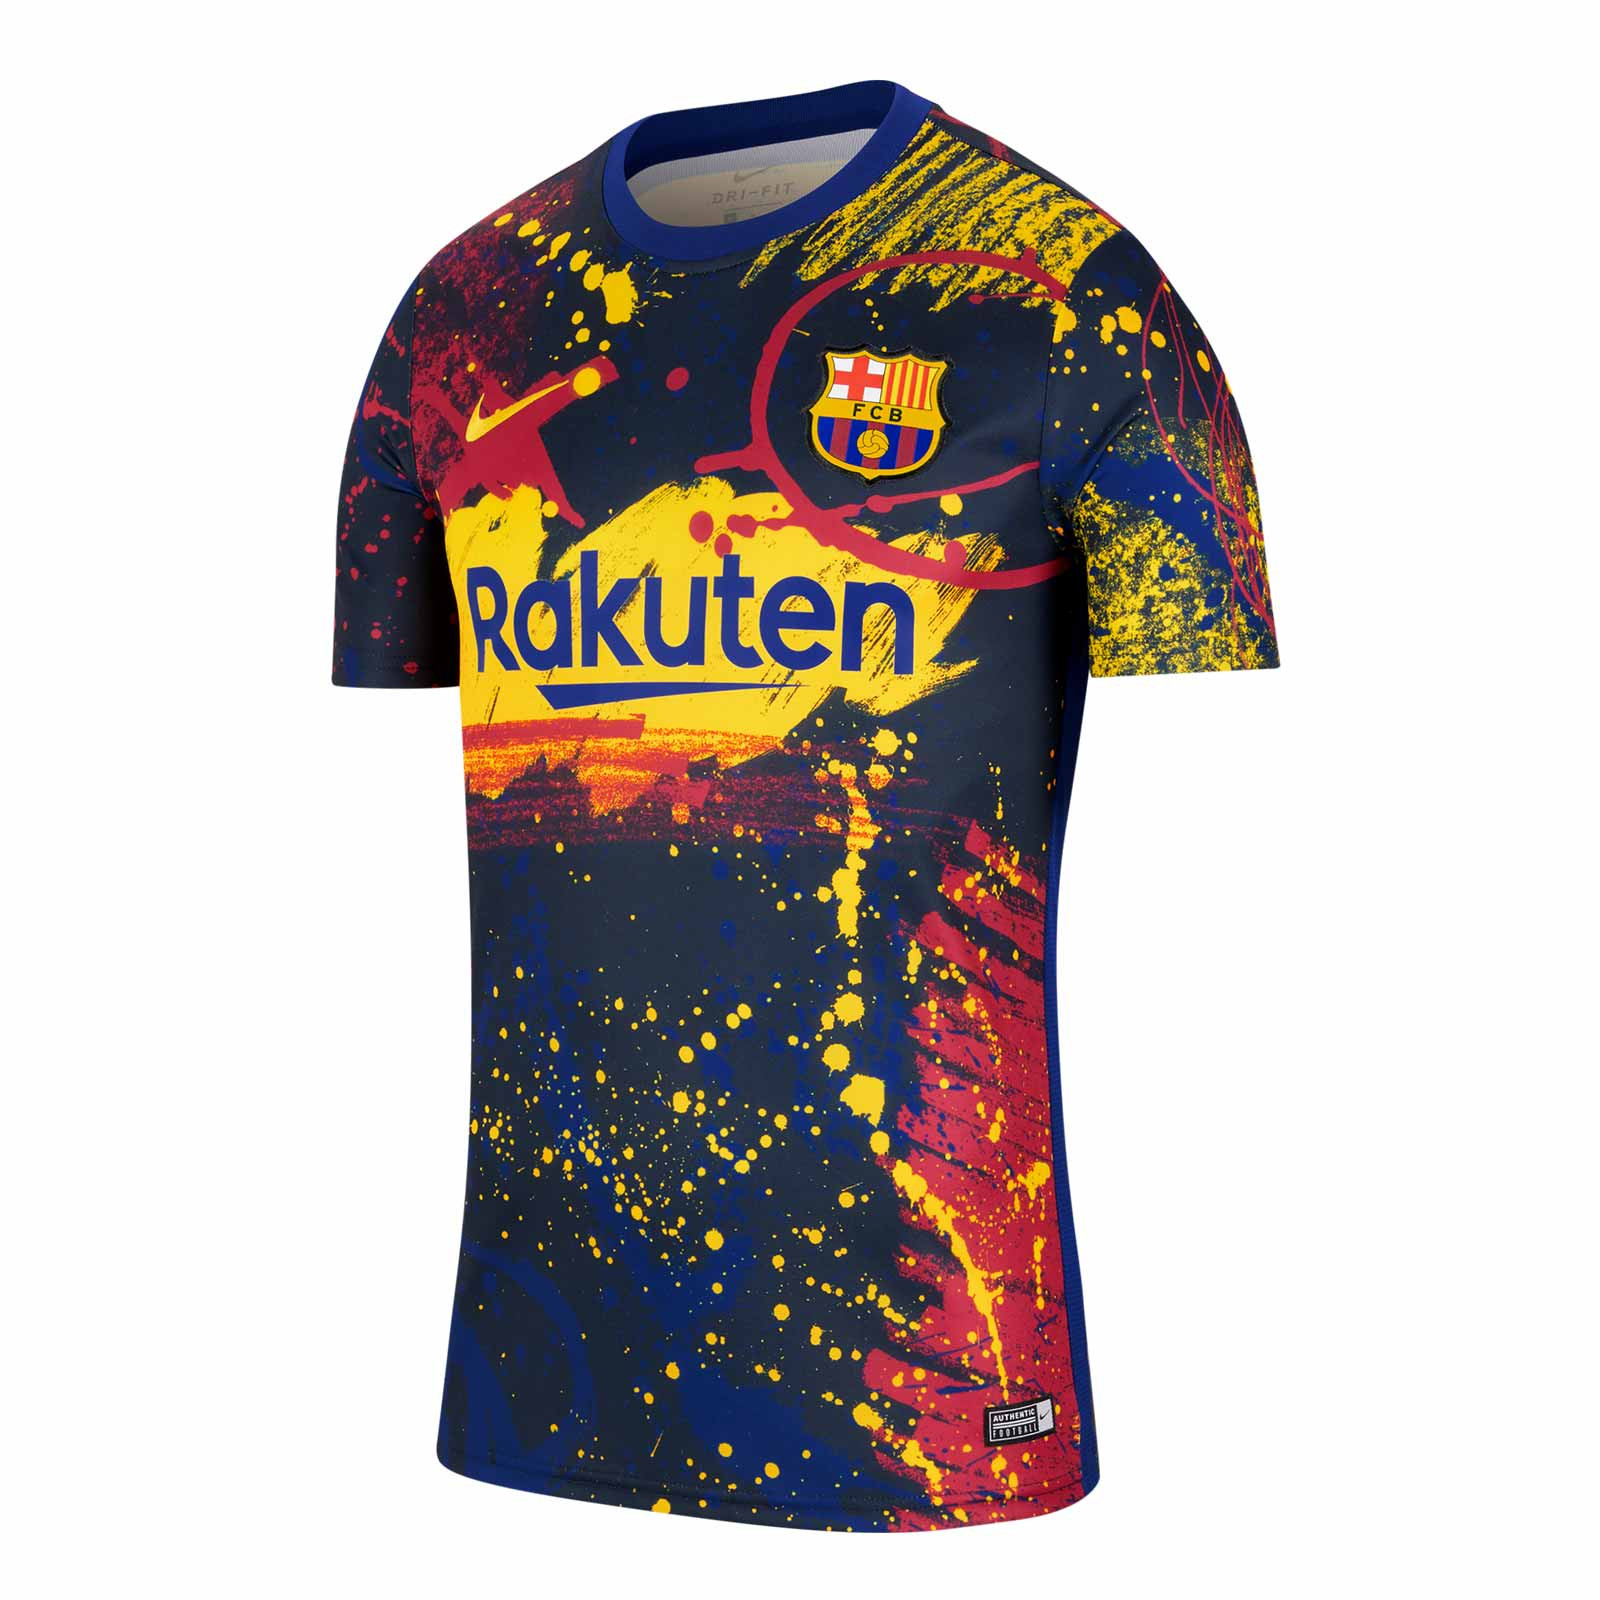 Camiseta “Barça” - Marino - Niño